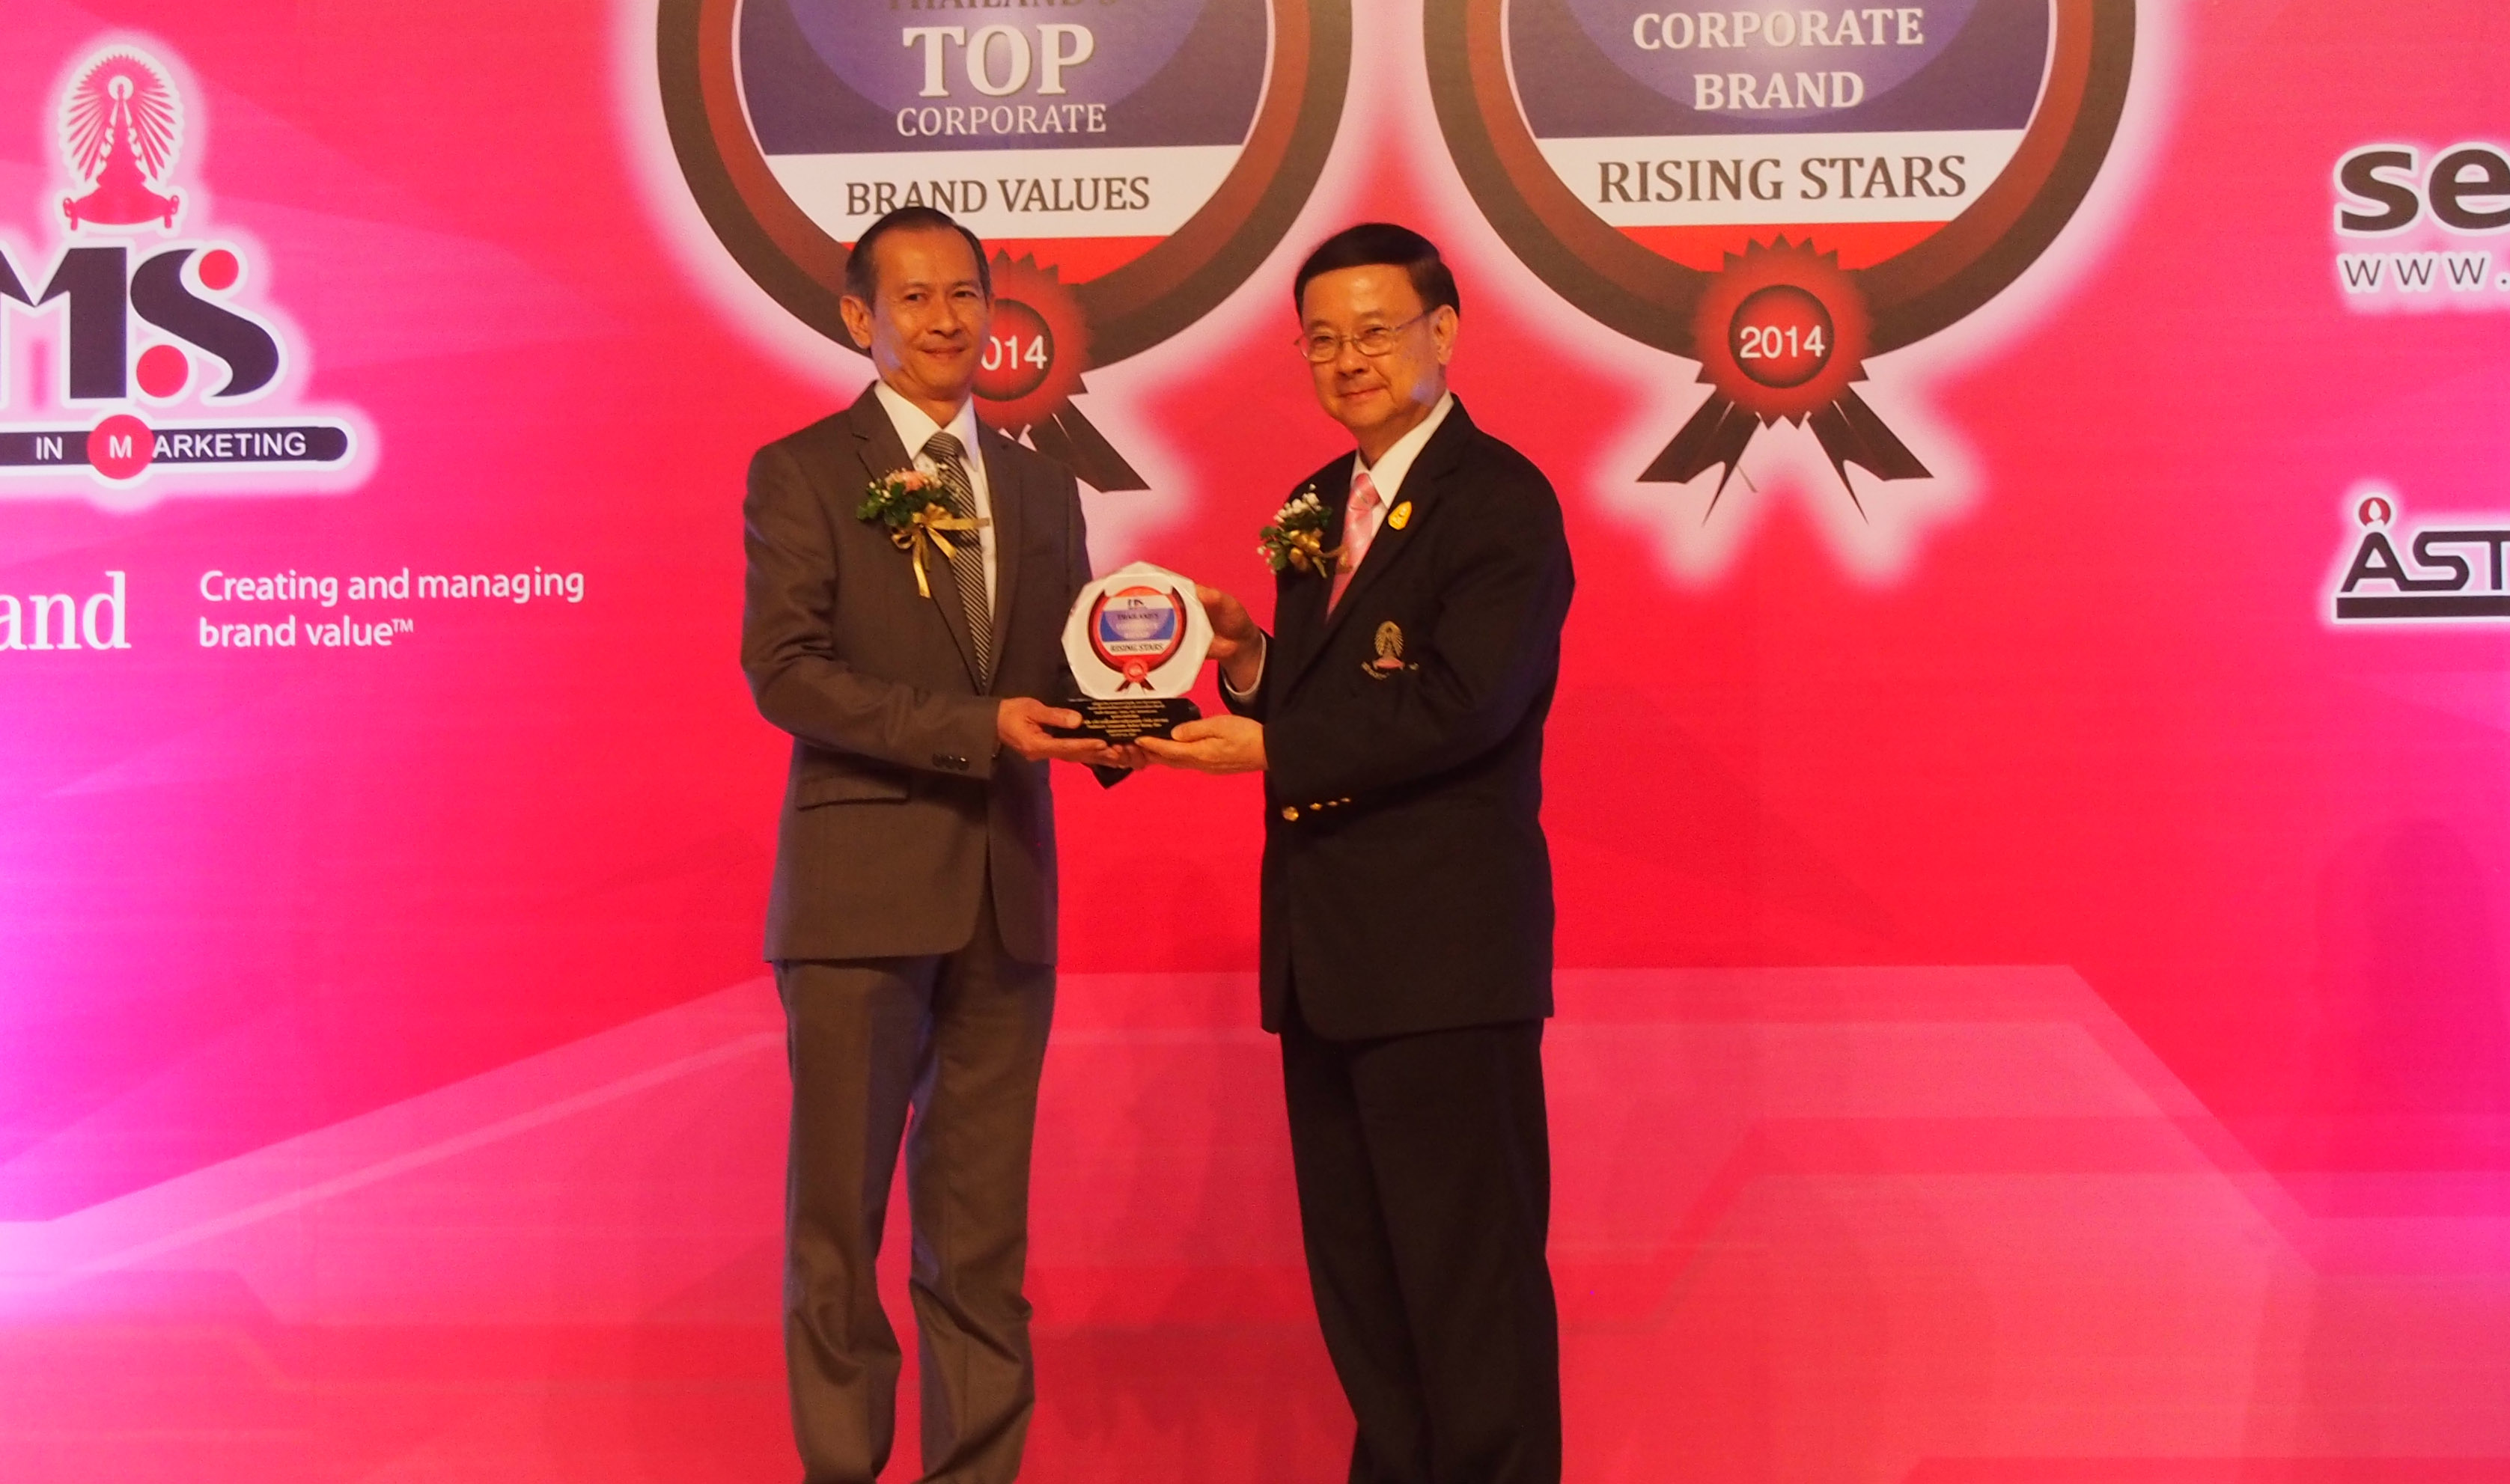 BAFS wins Thailand's Corporate Brand Rising Star 2014